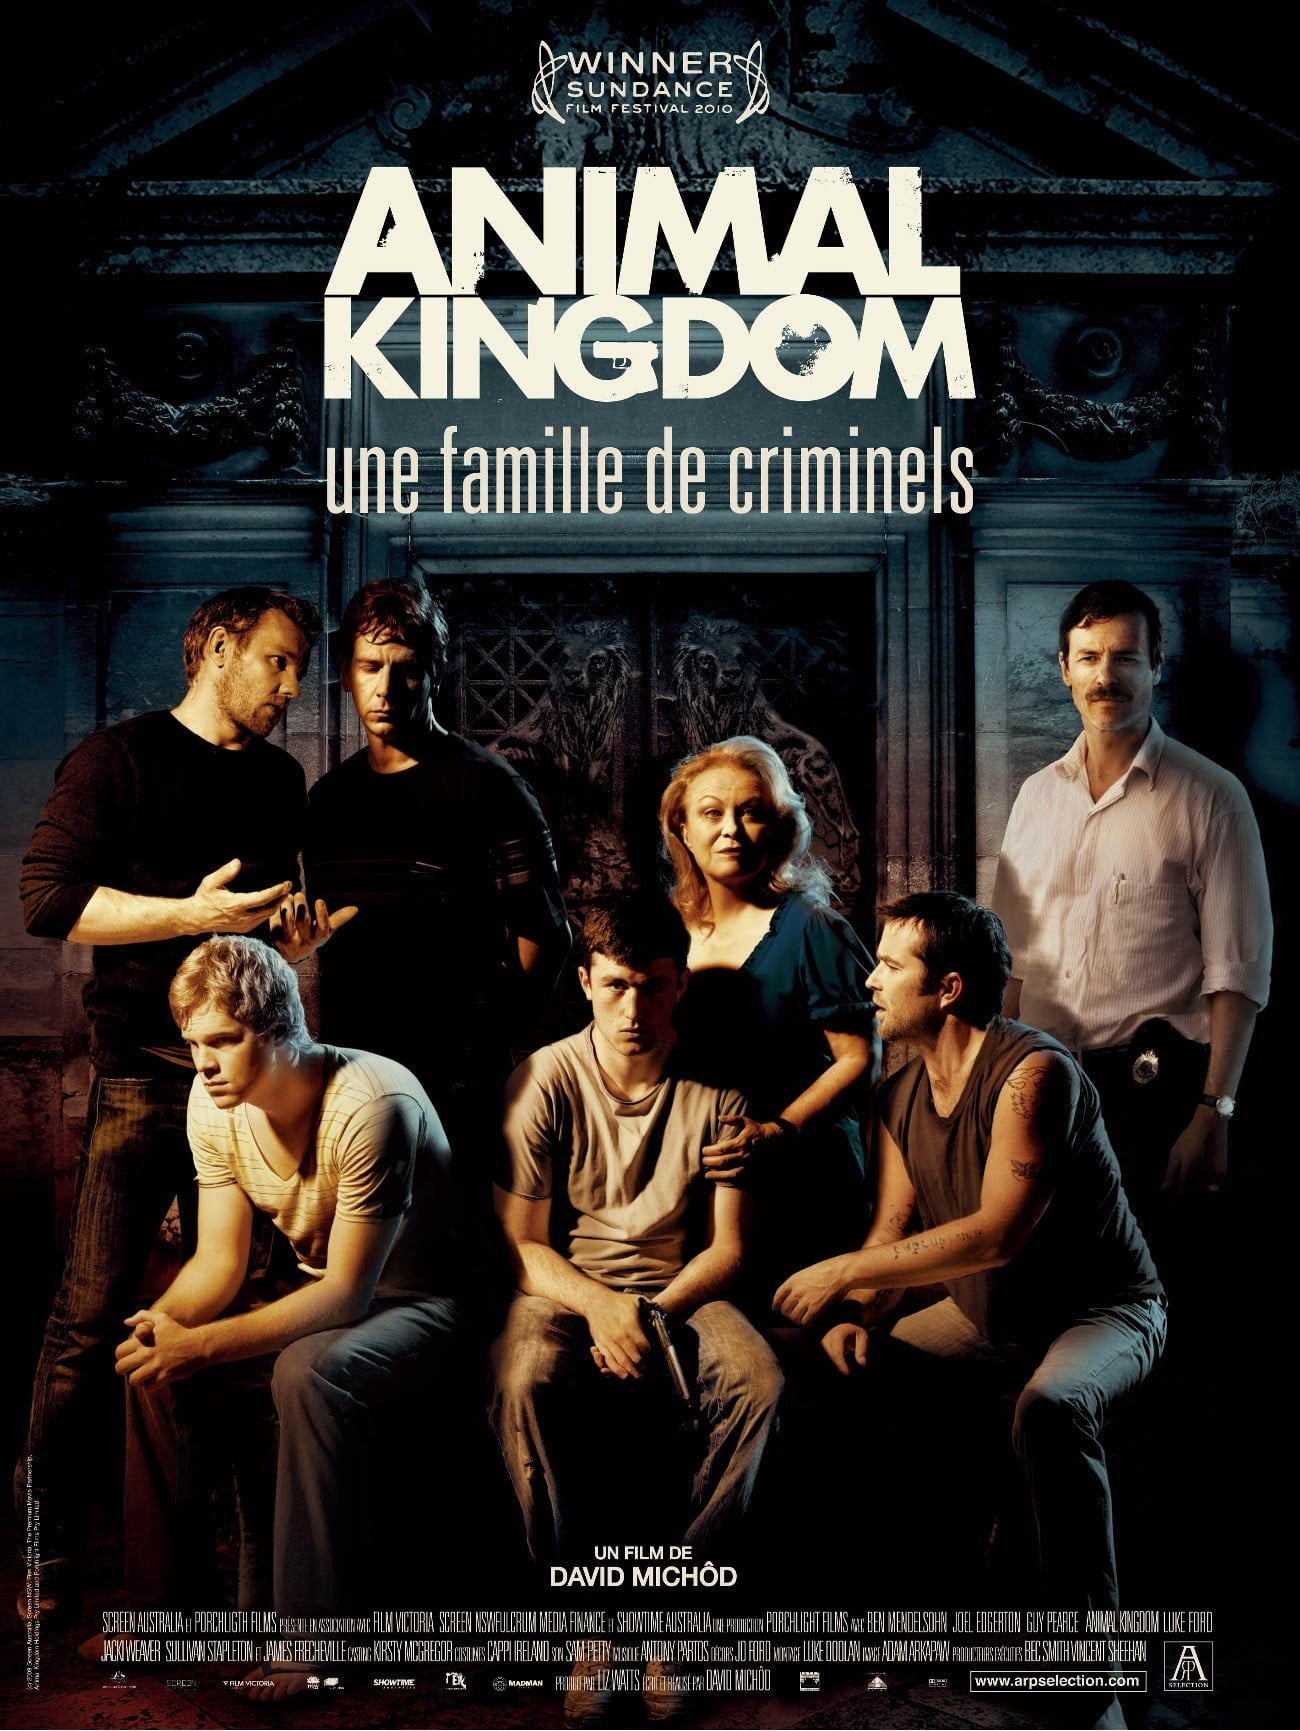 Affiche du film "Animal Kingdom"